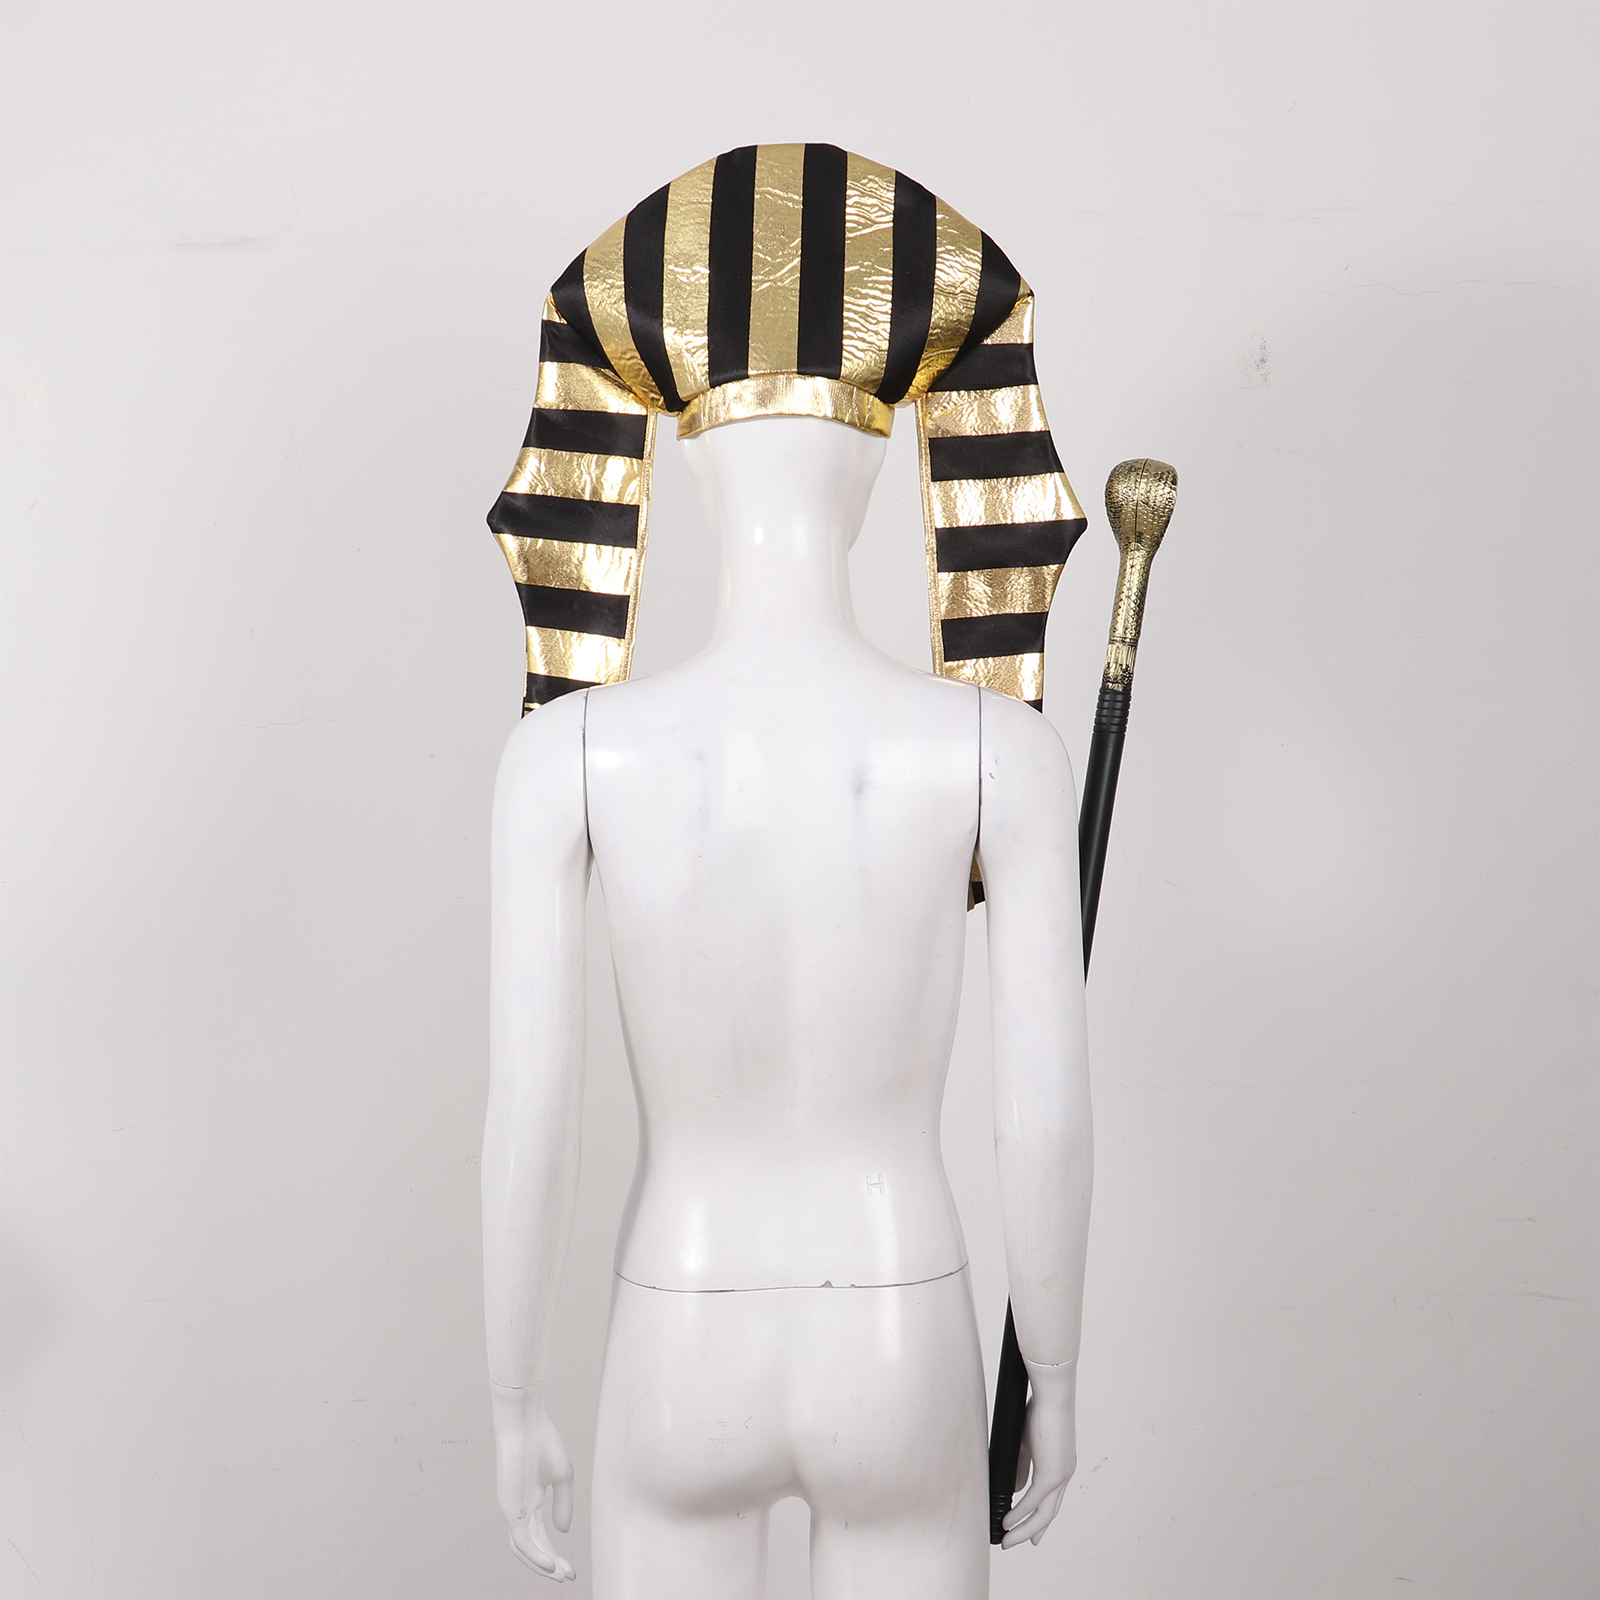 Mannen oude Egyptische farao cosplay Cosplay kostuum accessoire Halloween Gold Trims Cleopatra Oude Romeinse koningin Party Props